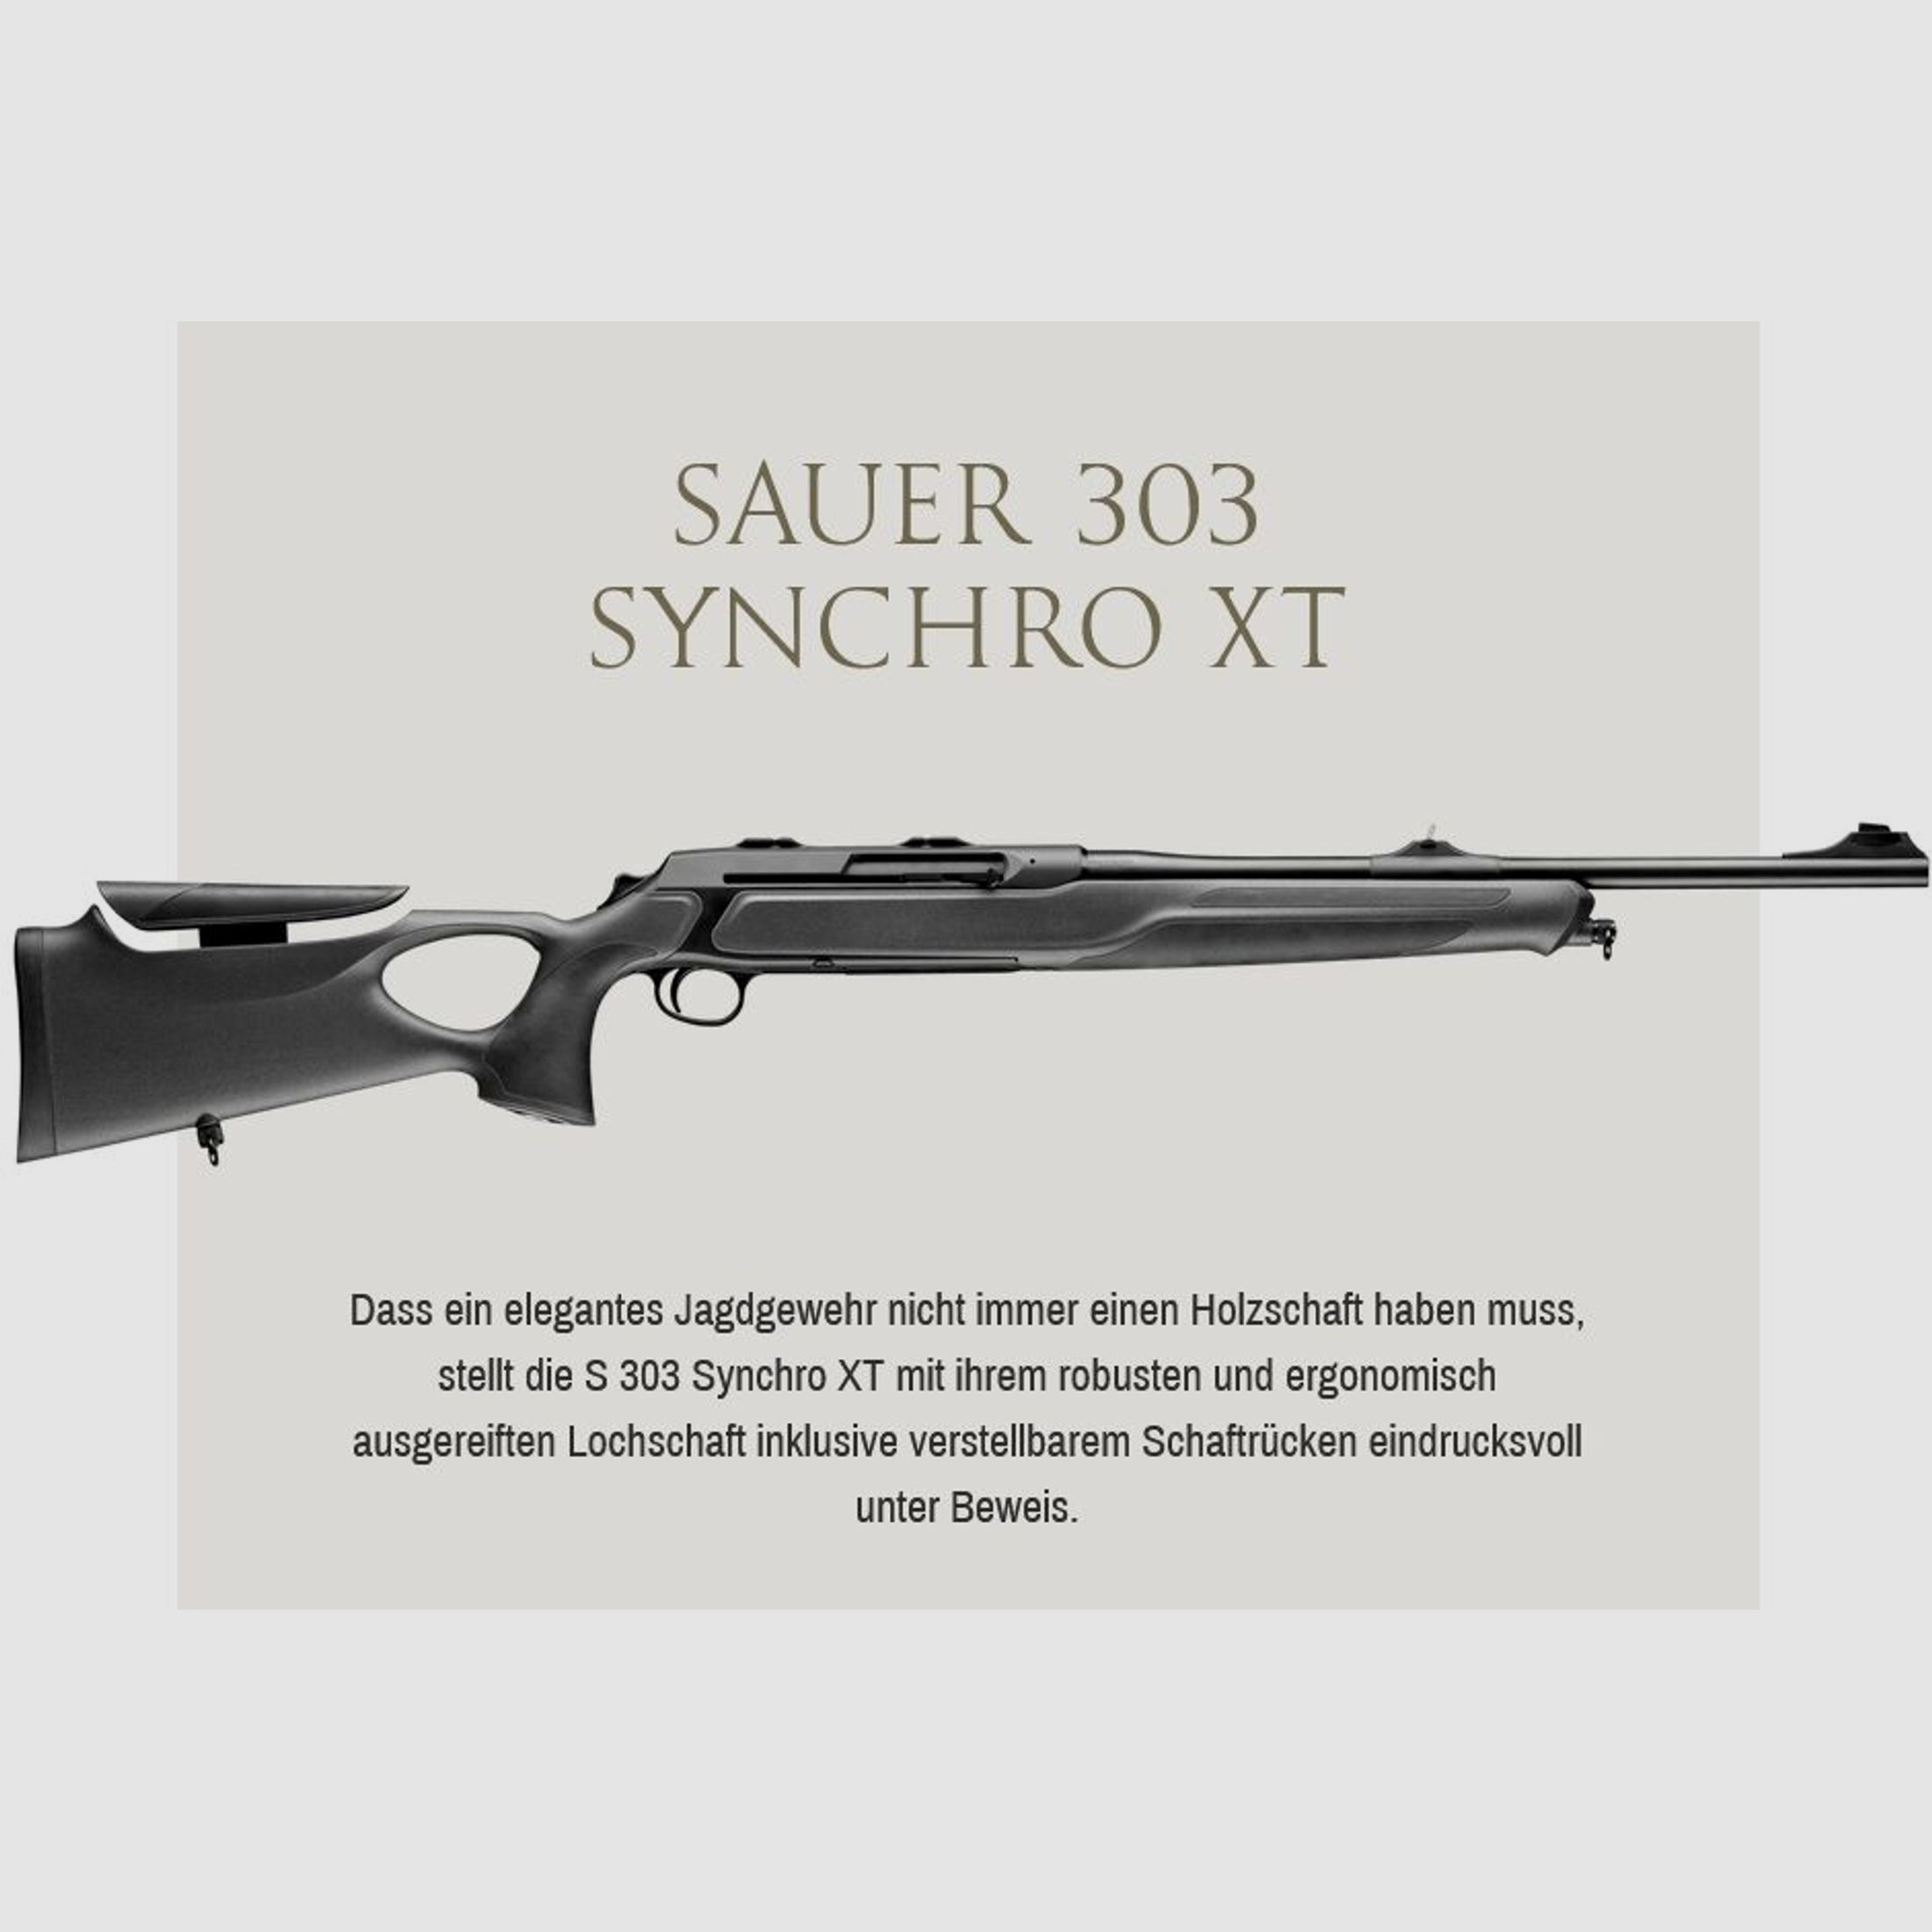 J.P. Sauer & Sohn	 SAUER S303 SYNCHRO XT Gen II + Optima Flow Schalldämpfer